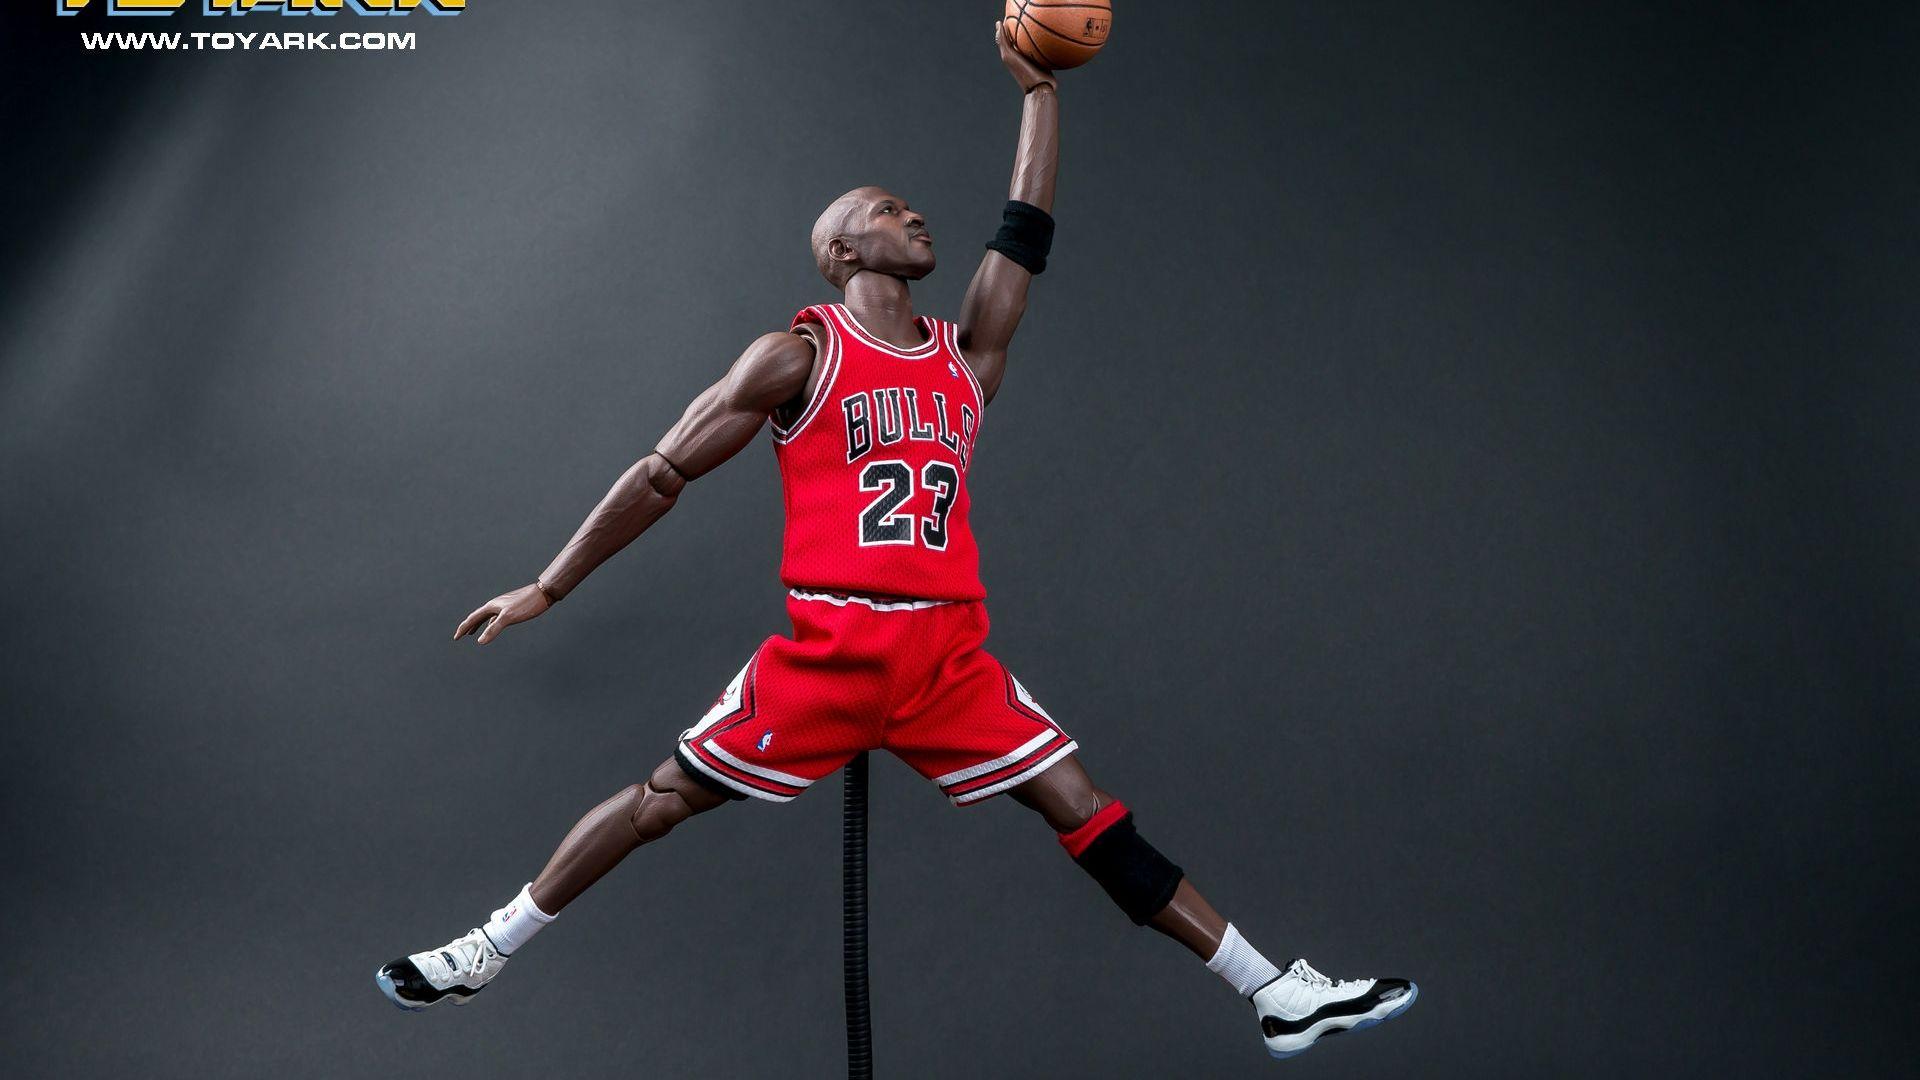 Wallpaper Michael Jordan, basketball, basketball, smile, NBA, Michael  Jordan, NBA, legends images for desktop, section спорт - download